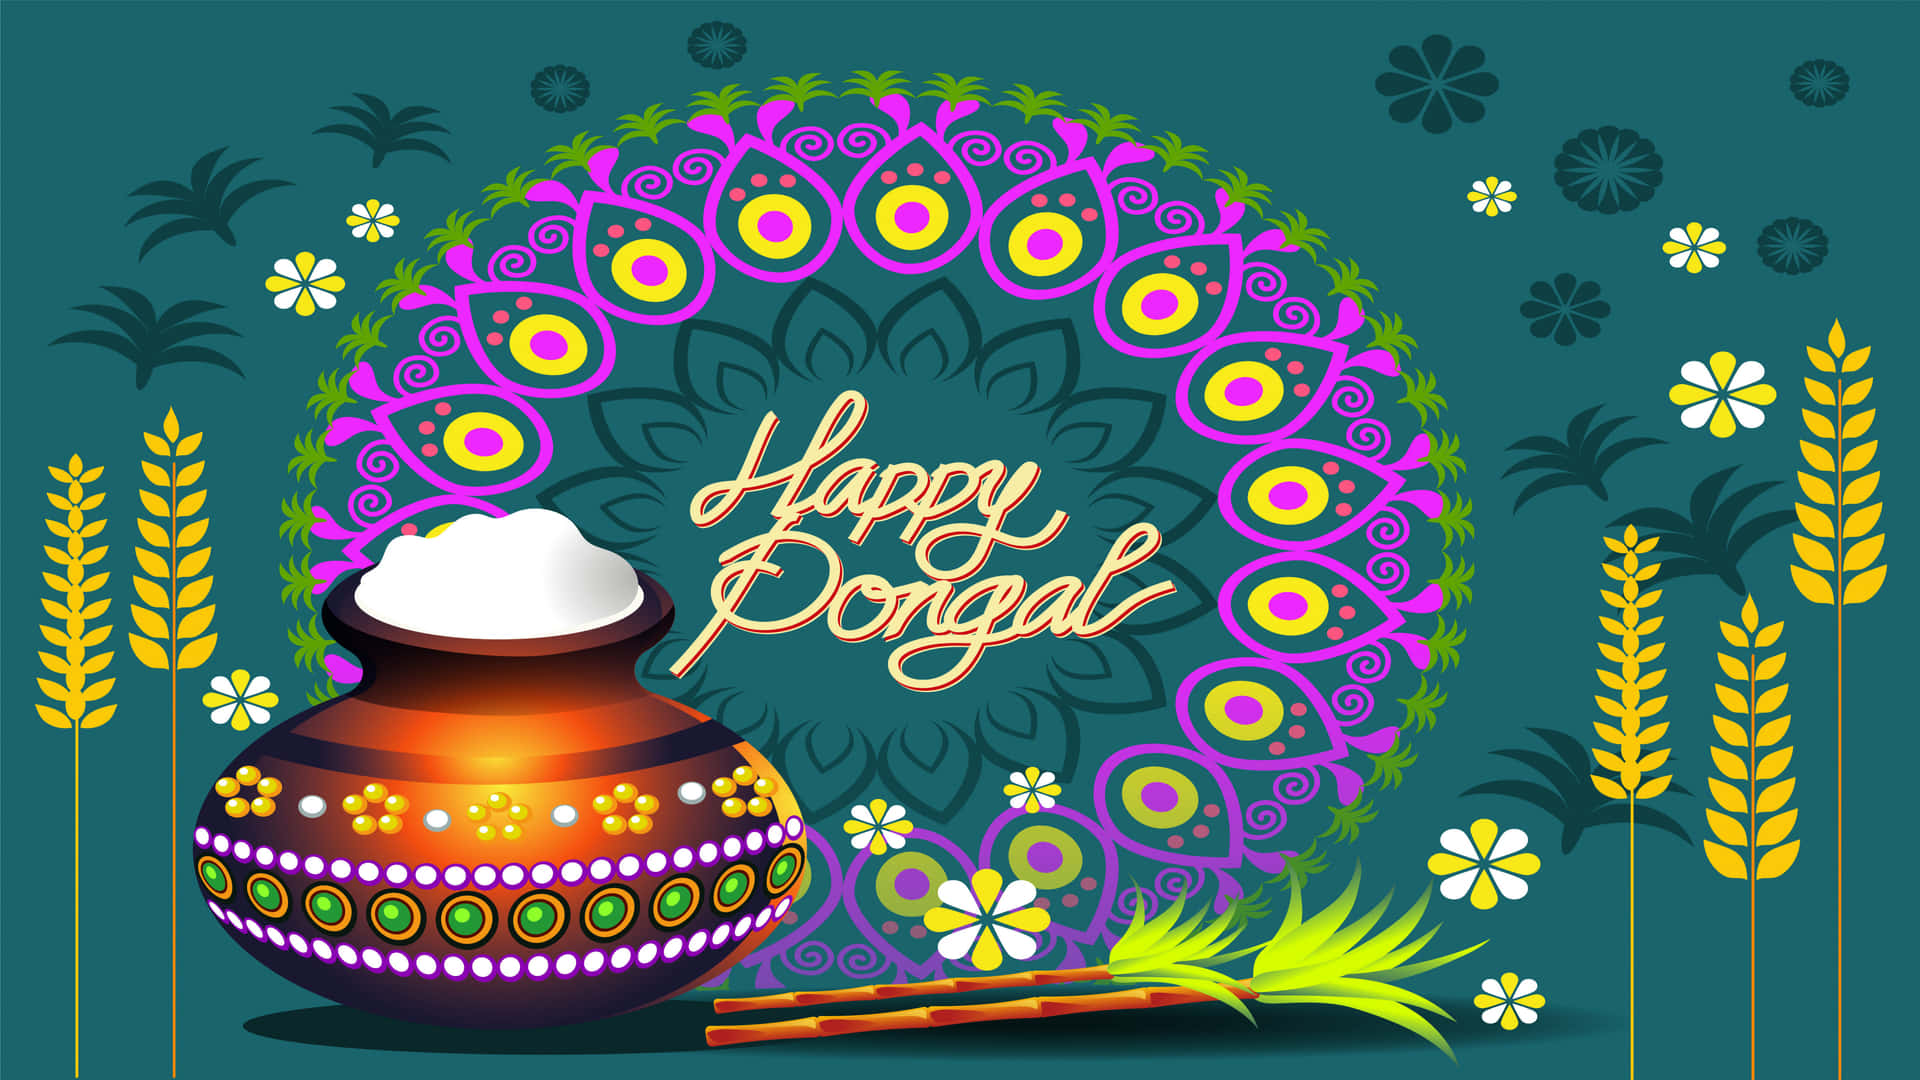 Celebrating Pongal with a Colorful Rangoli